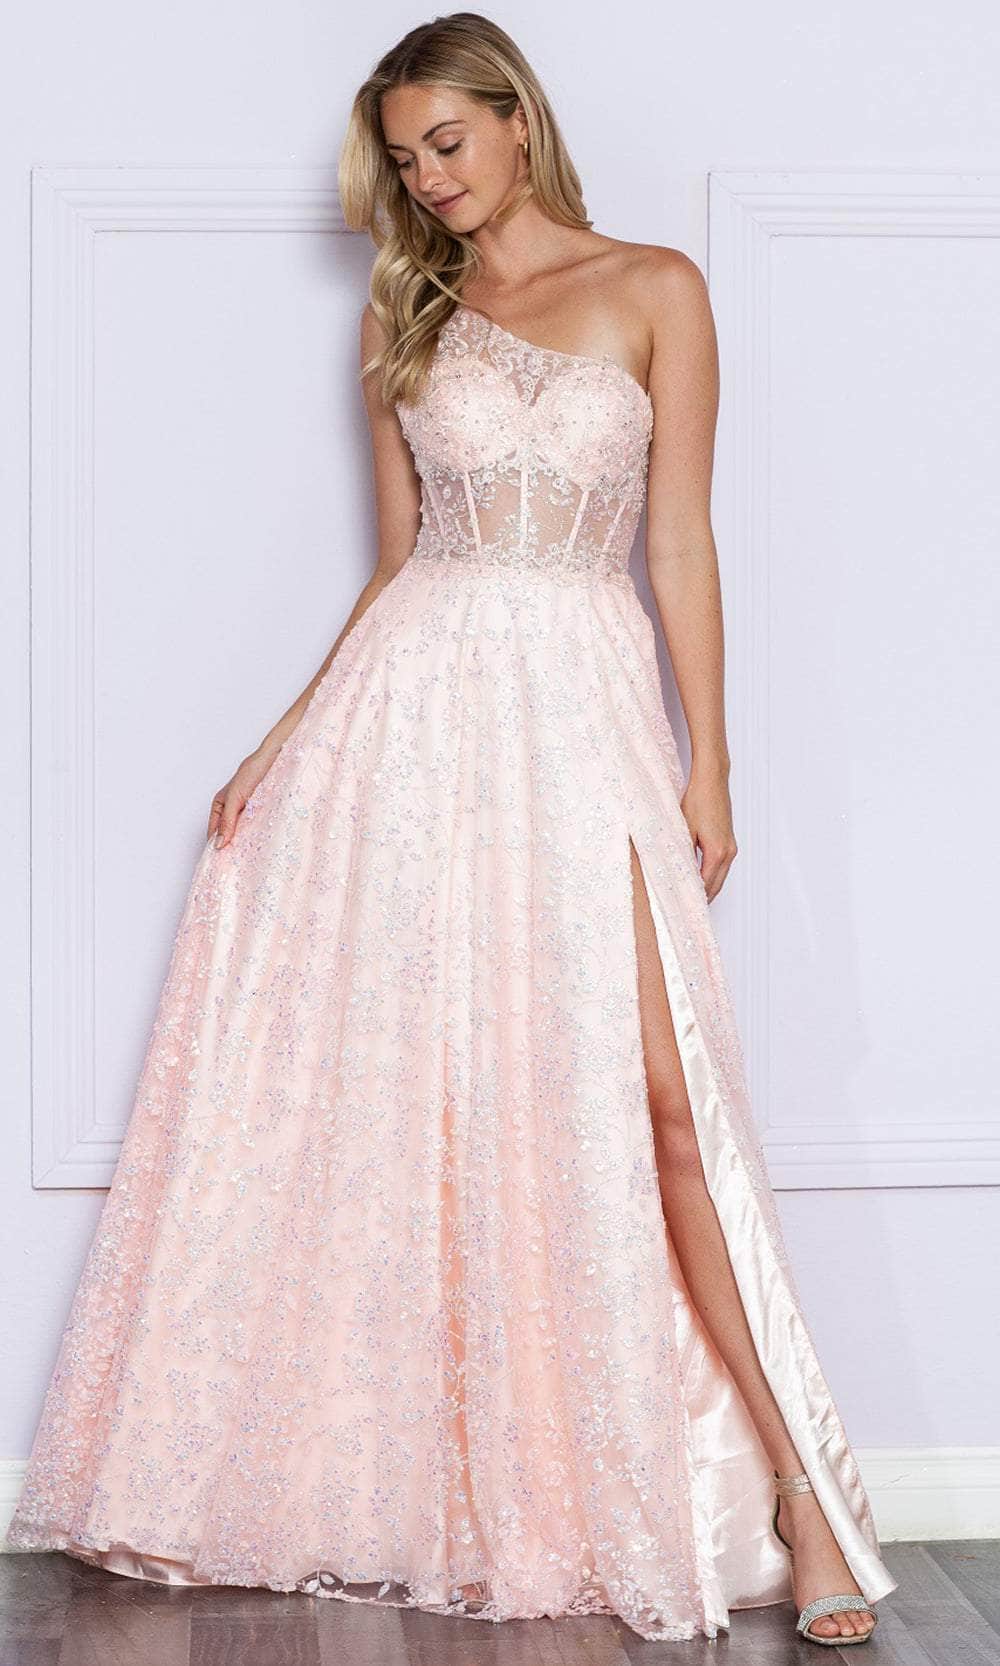 Image of Poly USA 9372 - Beaded Applique Asymmetric Prom Dress